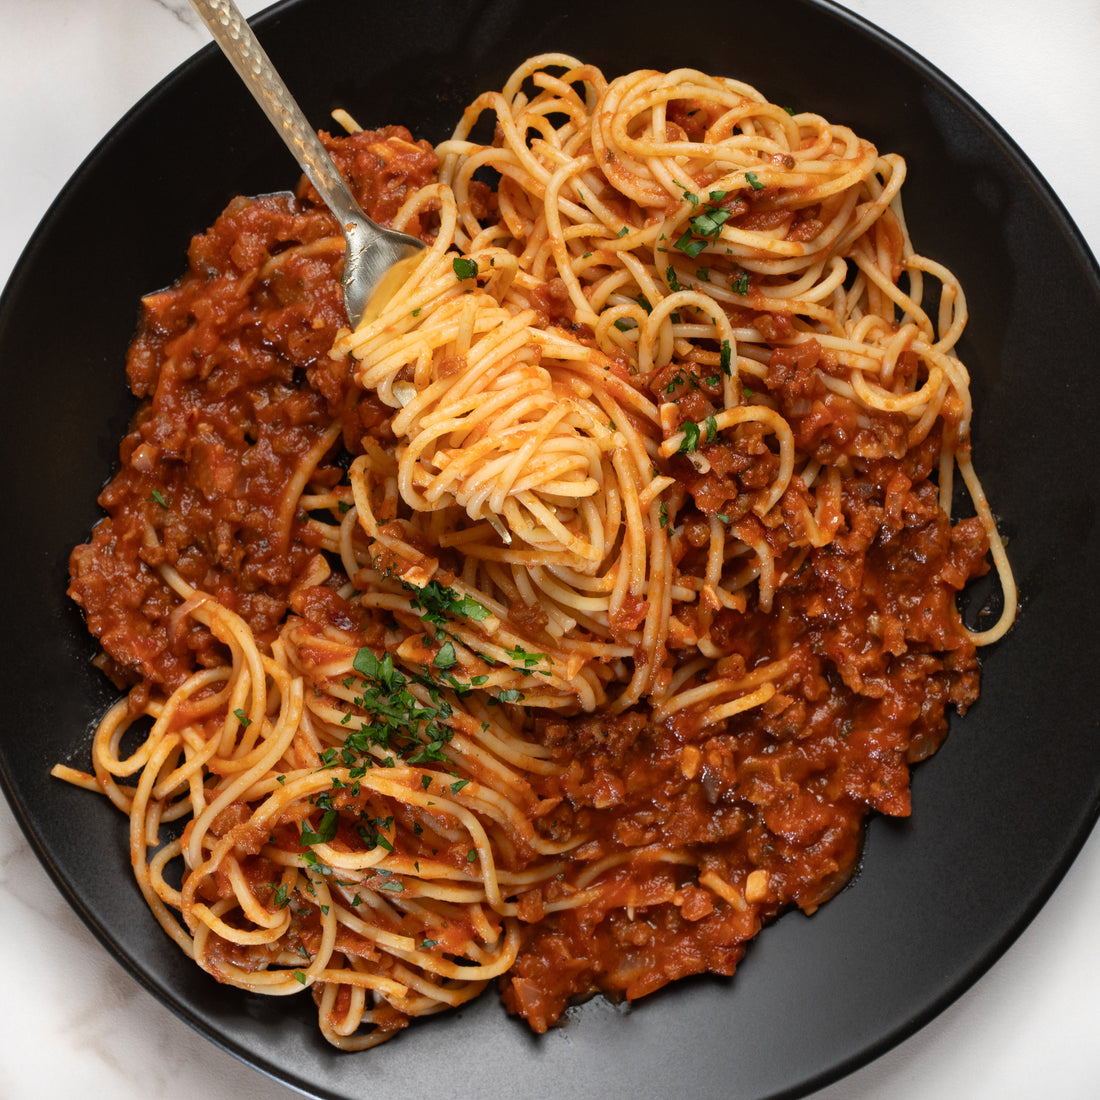 Spaghetti and ME’EAT Sauce